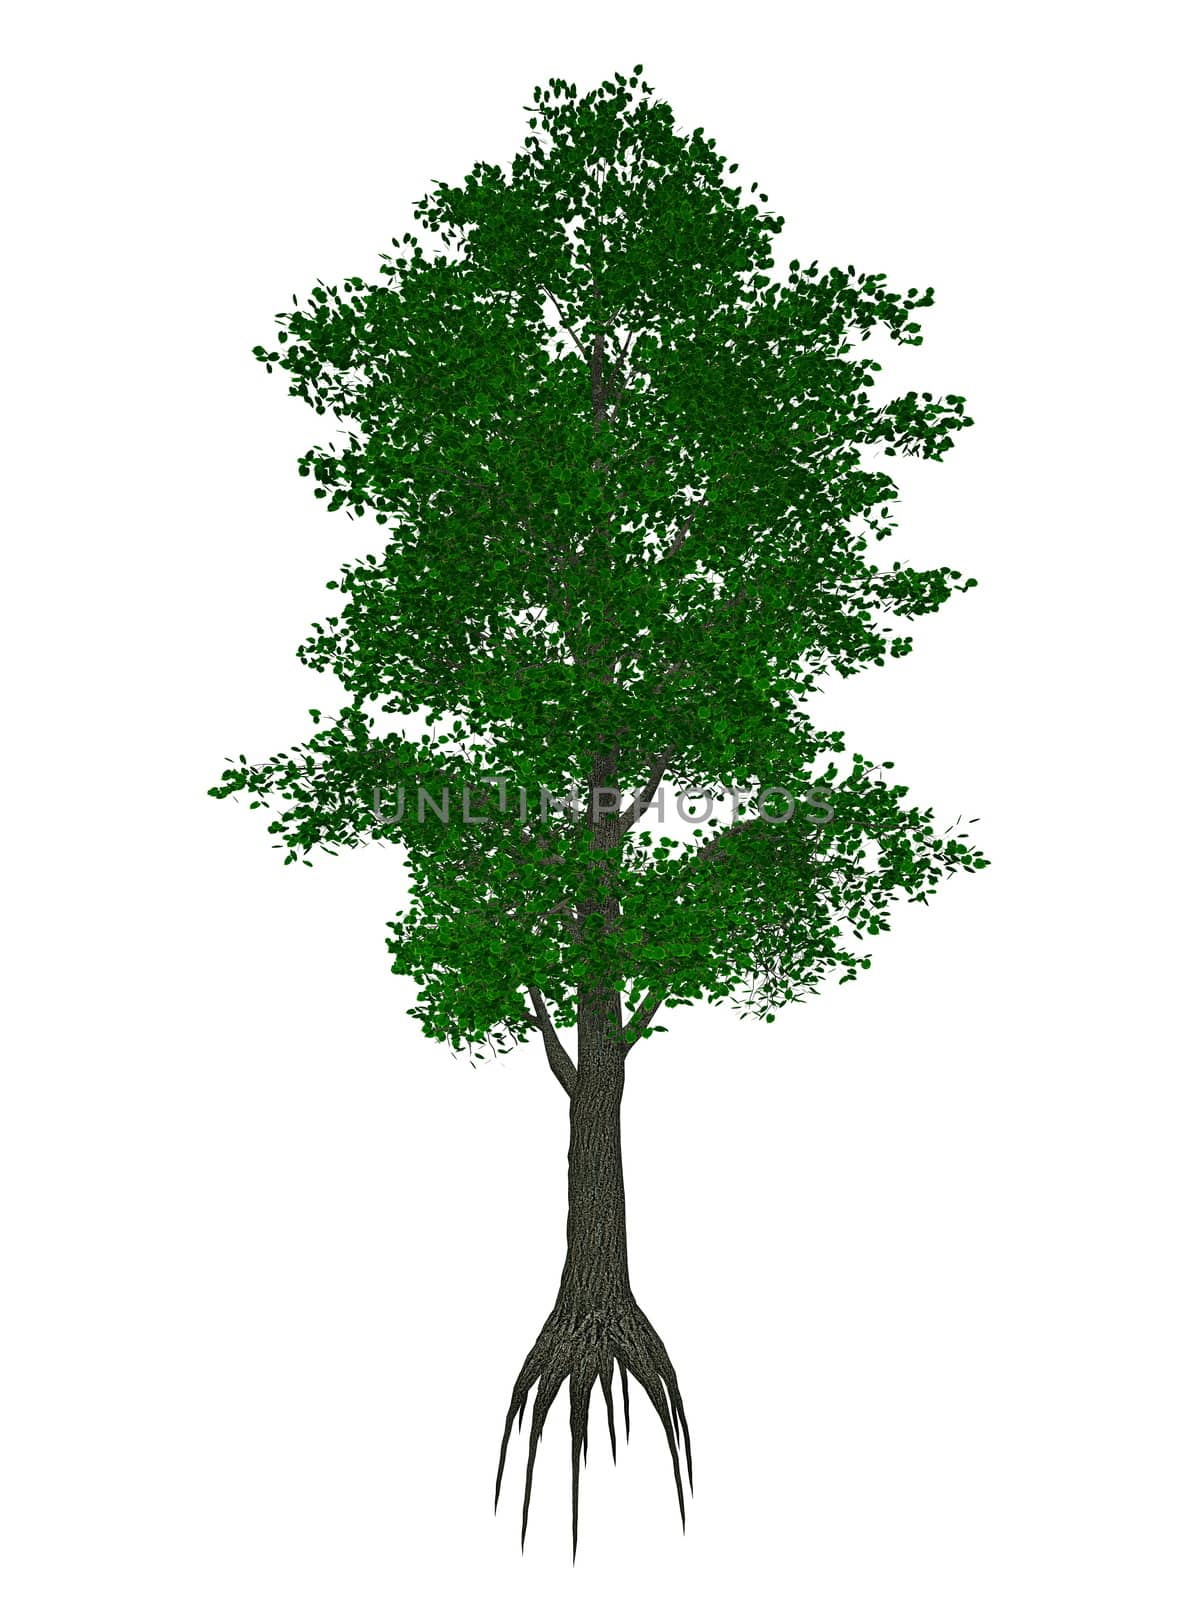 Small-leaved lime or little-leaf linden, tilia cordata tree - 3D render by Elenaphotos21